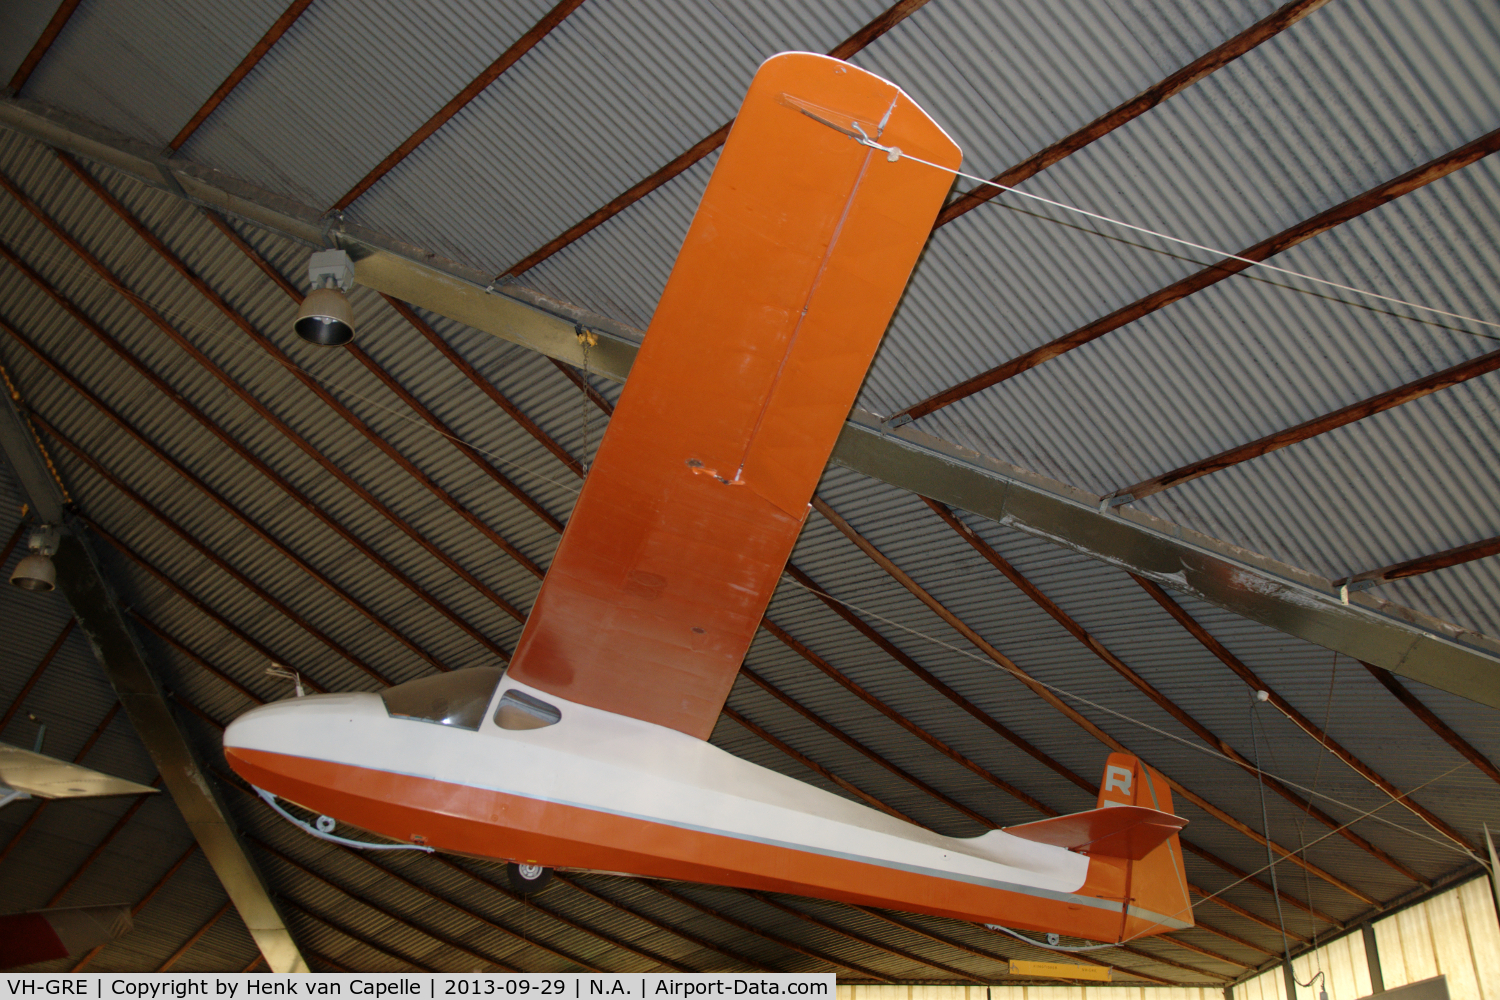 VH-GRE, 1960 Edmund Schneider Limited ES-57 Kingfisher III C/N 42, Kingfisher glider in the RAAFA AViation Heritage Museum in Bull Creek, Western Australia.